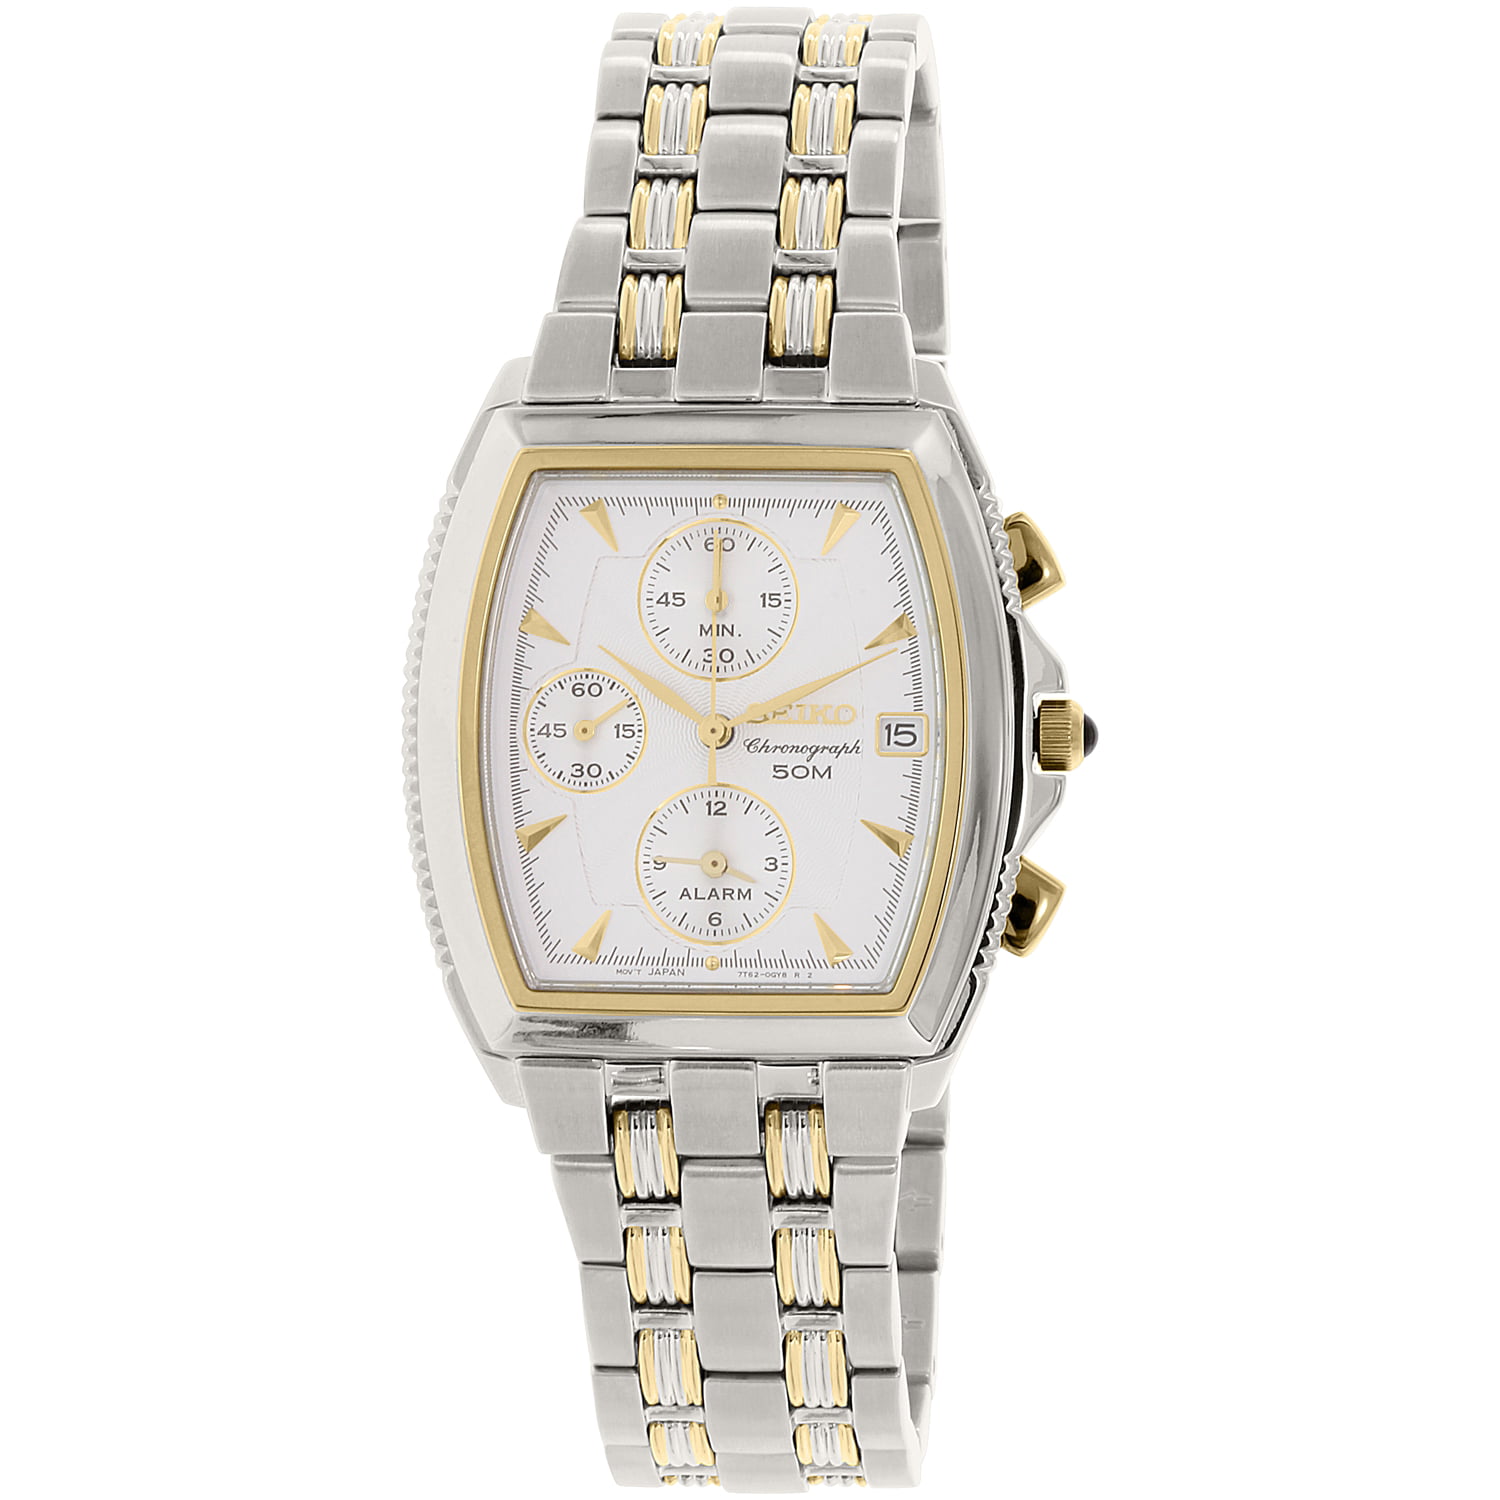 Seiko Men's SNA610 Gold Stainless-Steel Watch - Walmart.com